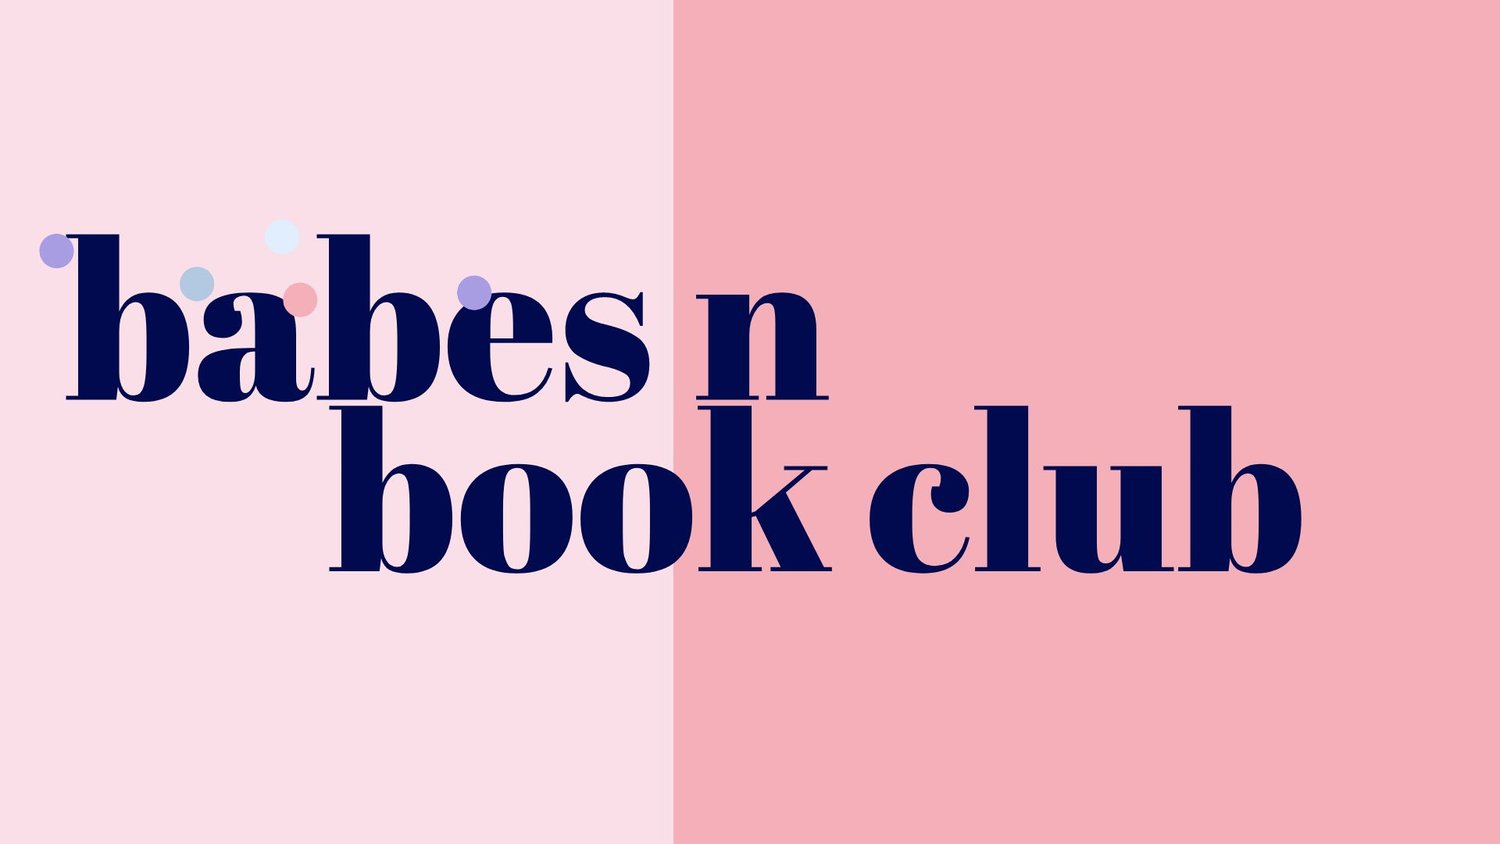 Babes n bookclub 